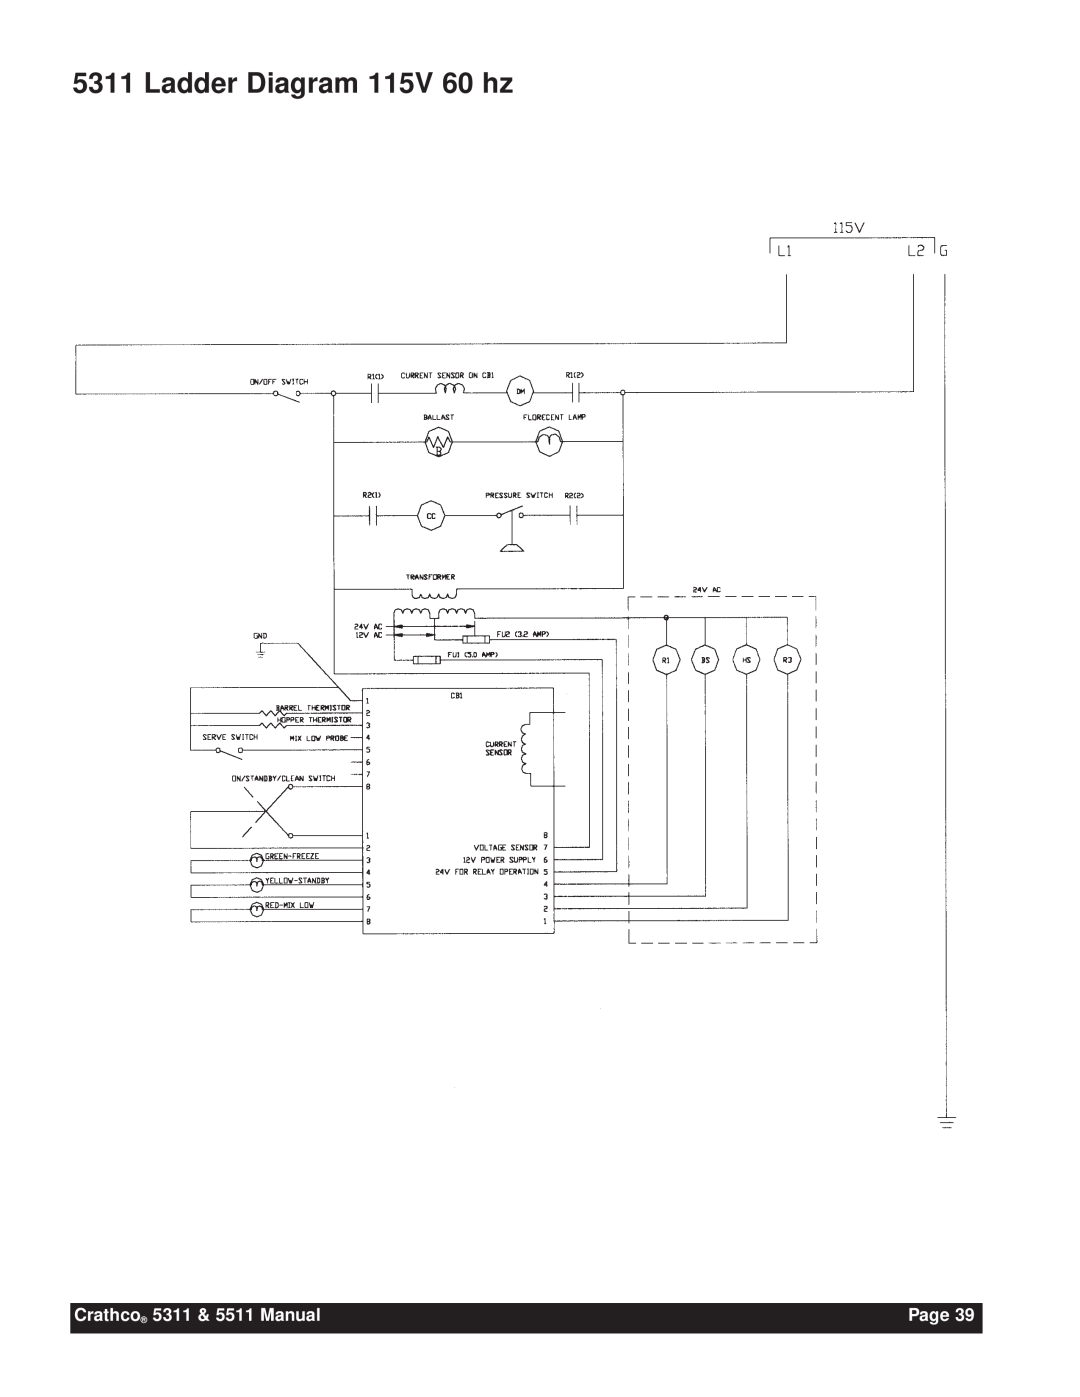 Grindmaster instruction manual Ladder Diagram 115V 60 hz, Crathco 5311 & 5511 Manual, Page 